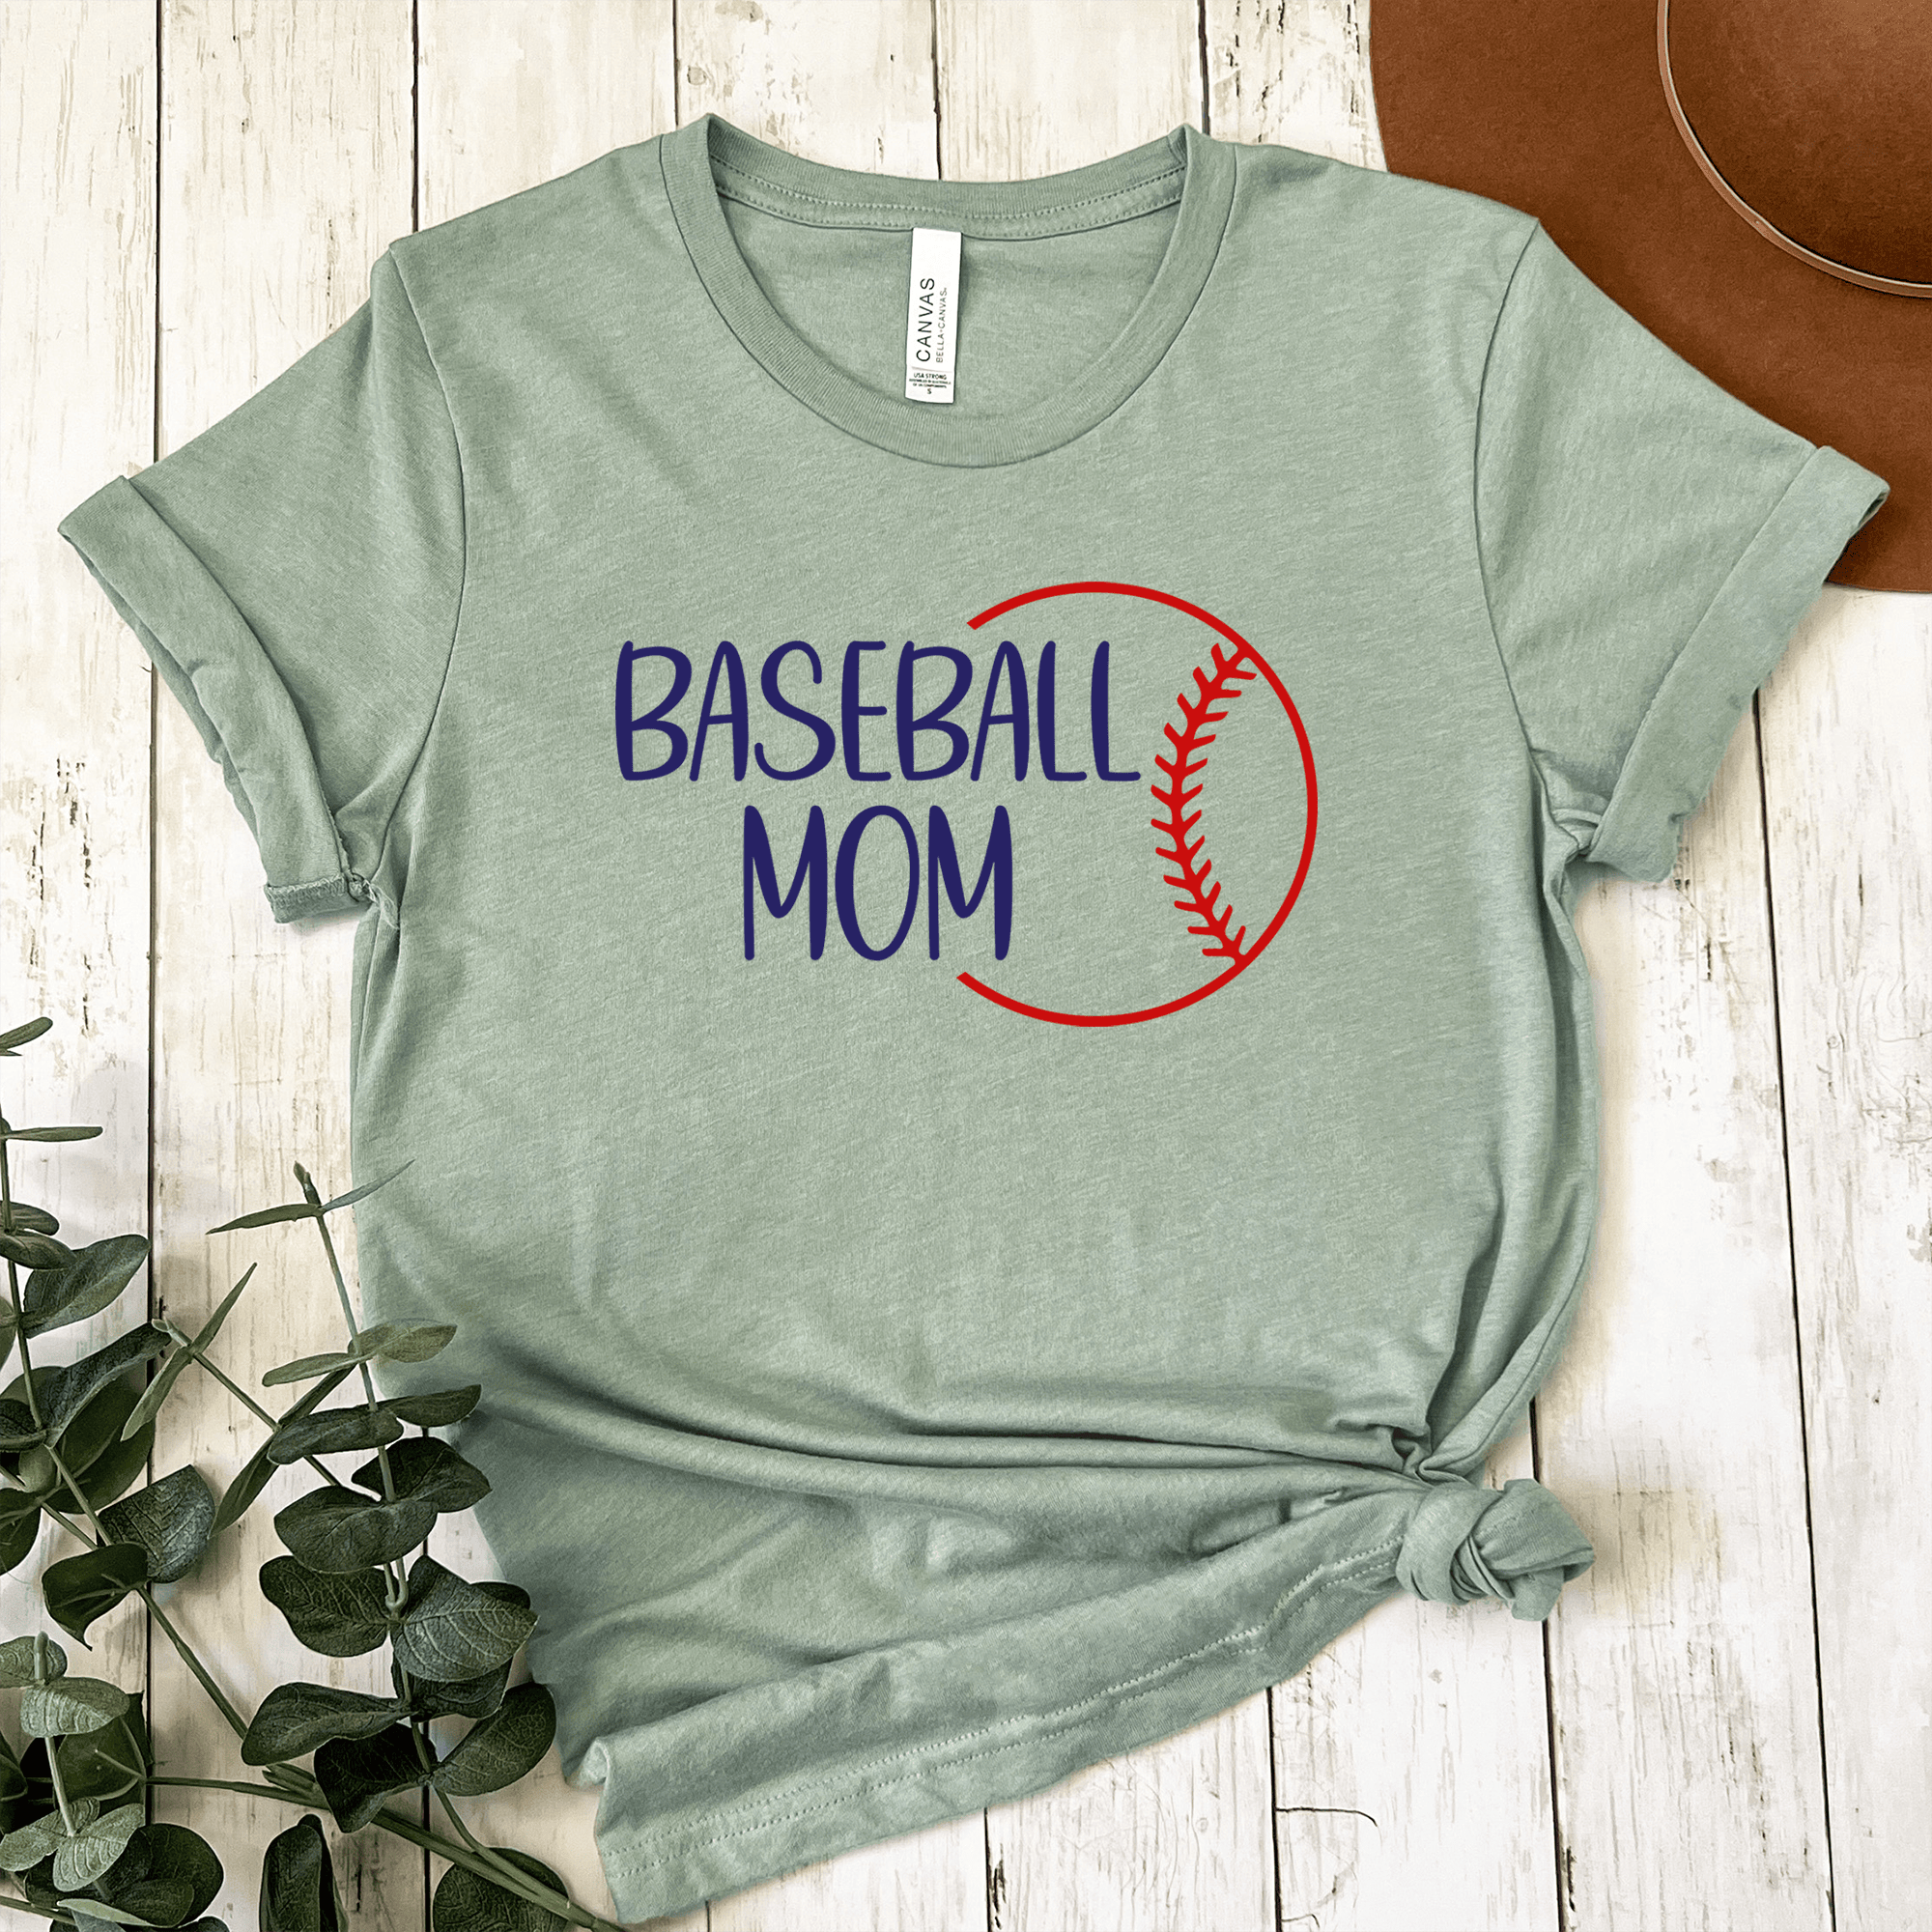 Womens Light Green T Shirt with Sassy-Baseball-Mom design